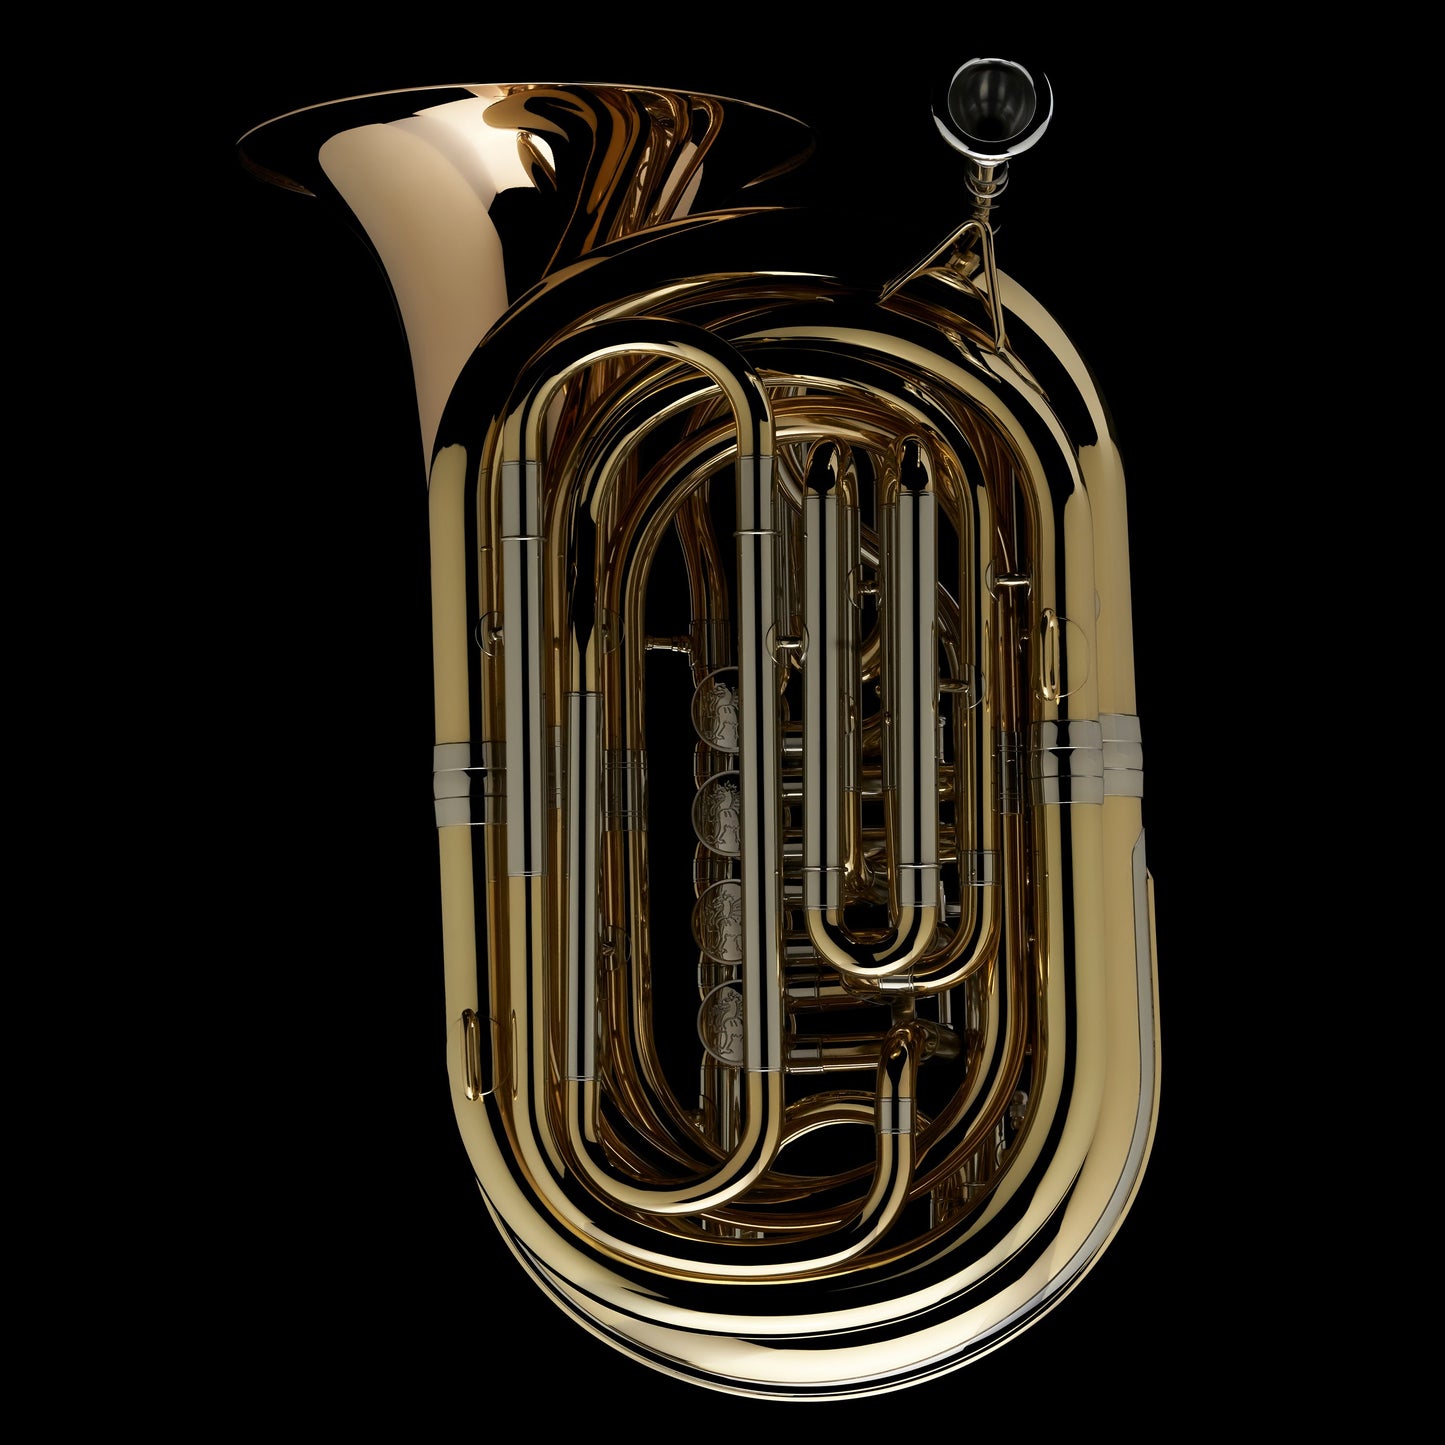 BBb Travel Tuba (tornister tuba) ‘Mighty Midget’ – TB160